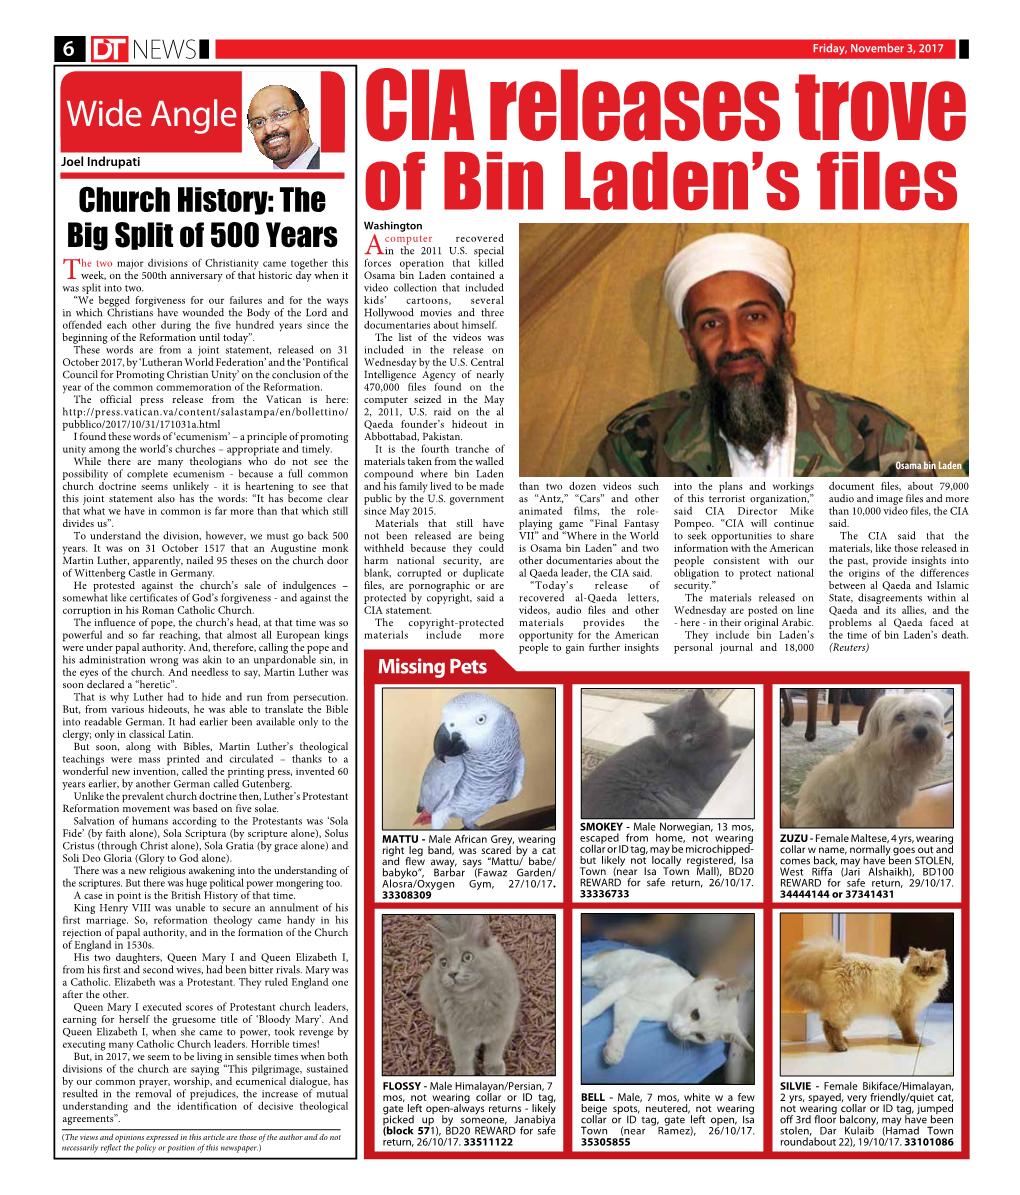 Of Bin Laden's Files